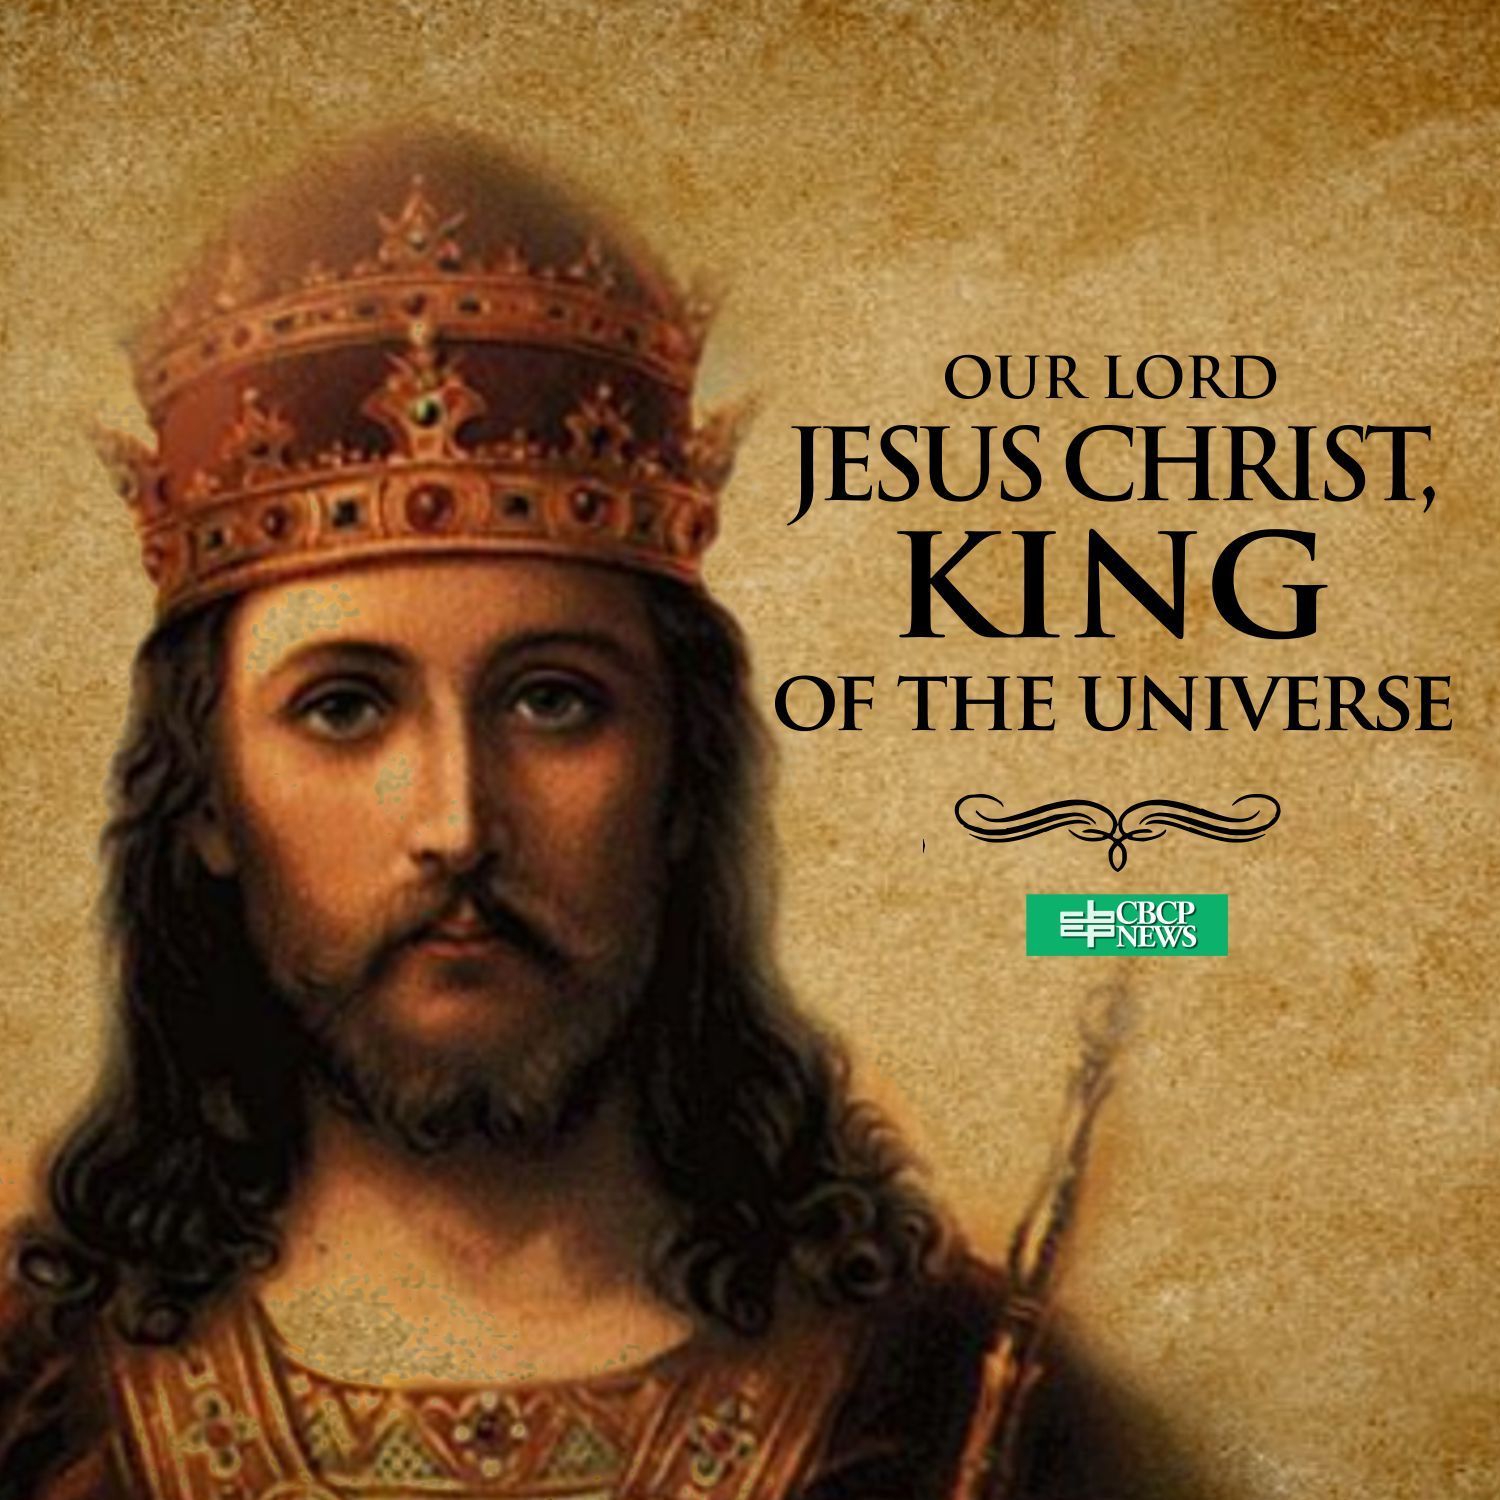 Jesus Is King Wallpapers